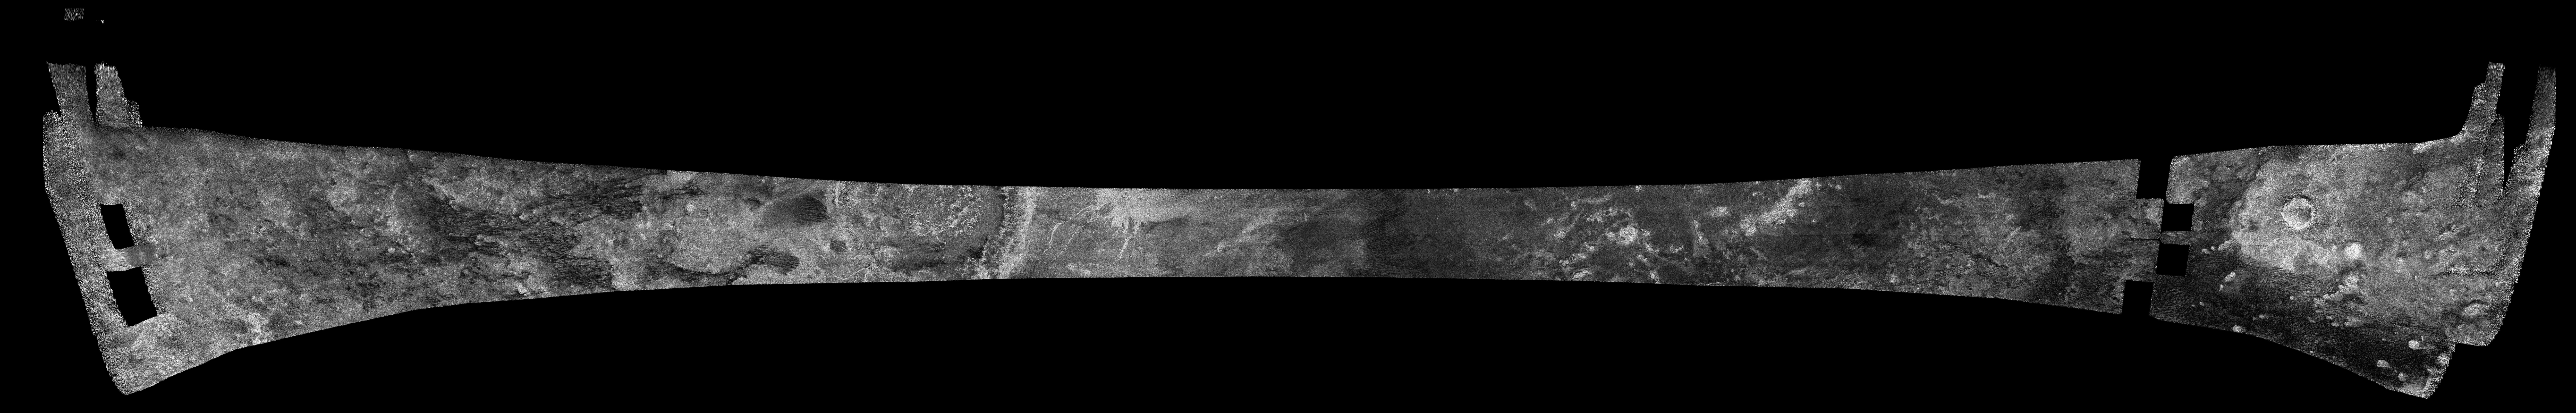 Titan seen by Cassini radar